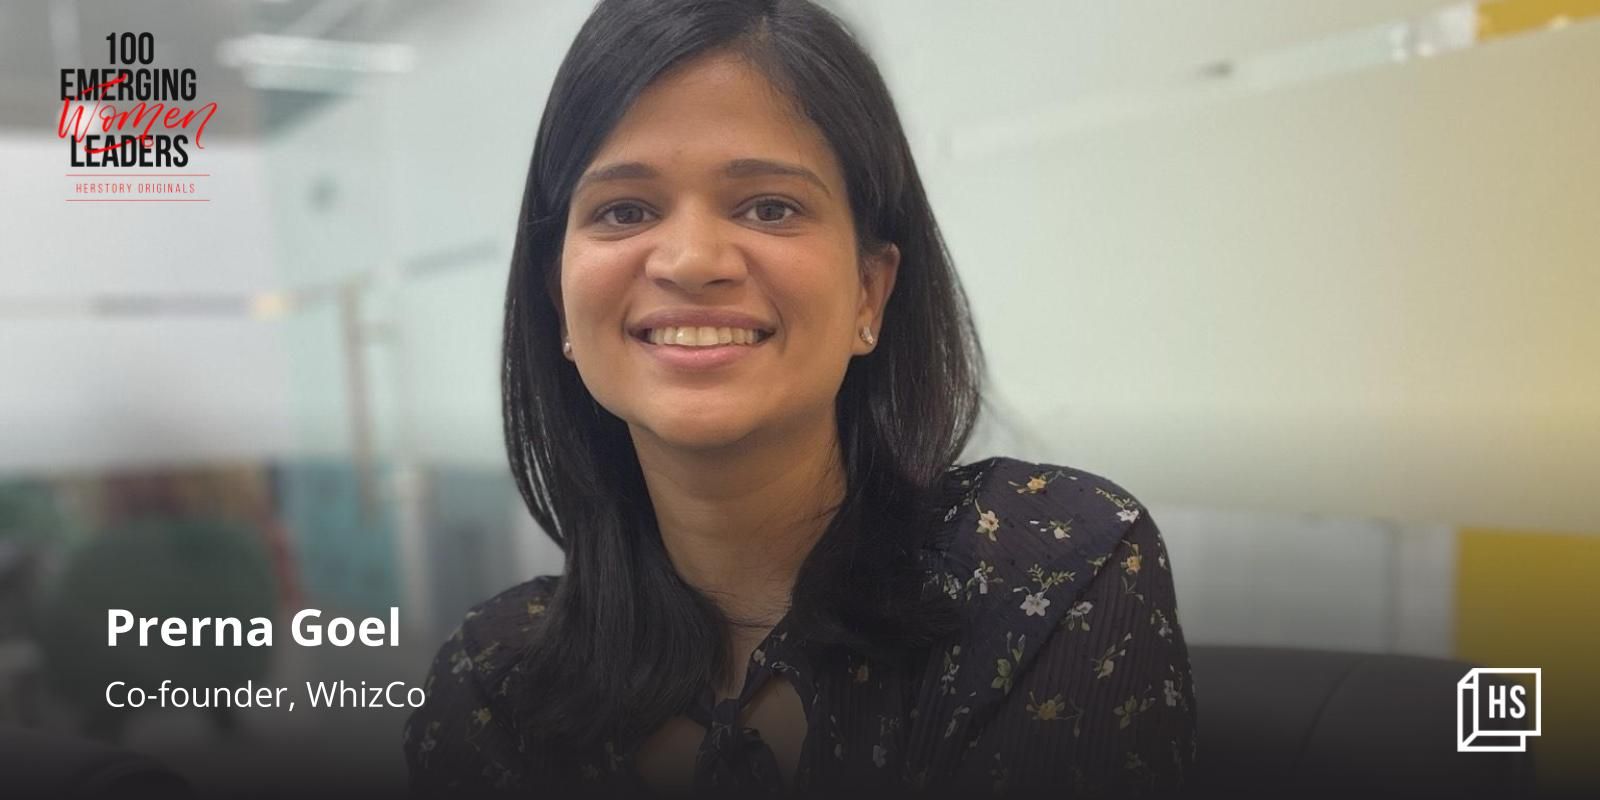 [100 Emerging Women Leaders] Prerna Goel on building her influencer marketing agency WhizCo
